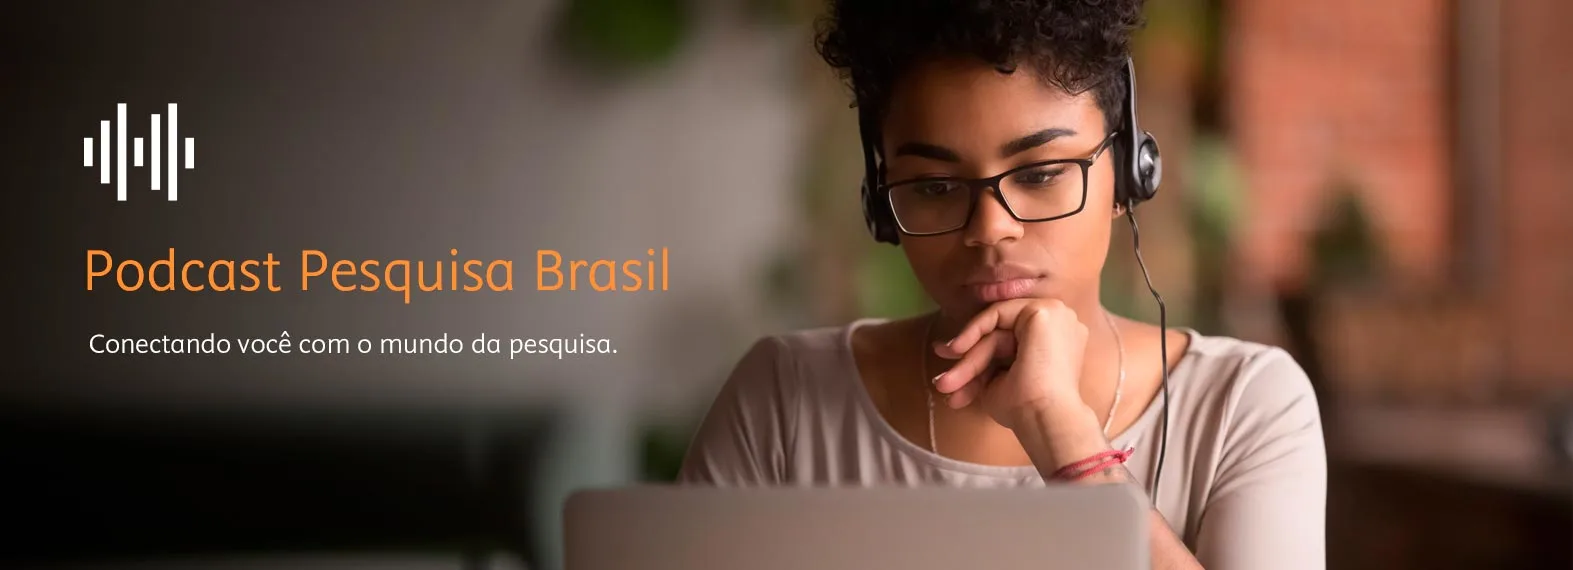 Podcast Pesquisa Brasil